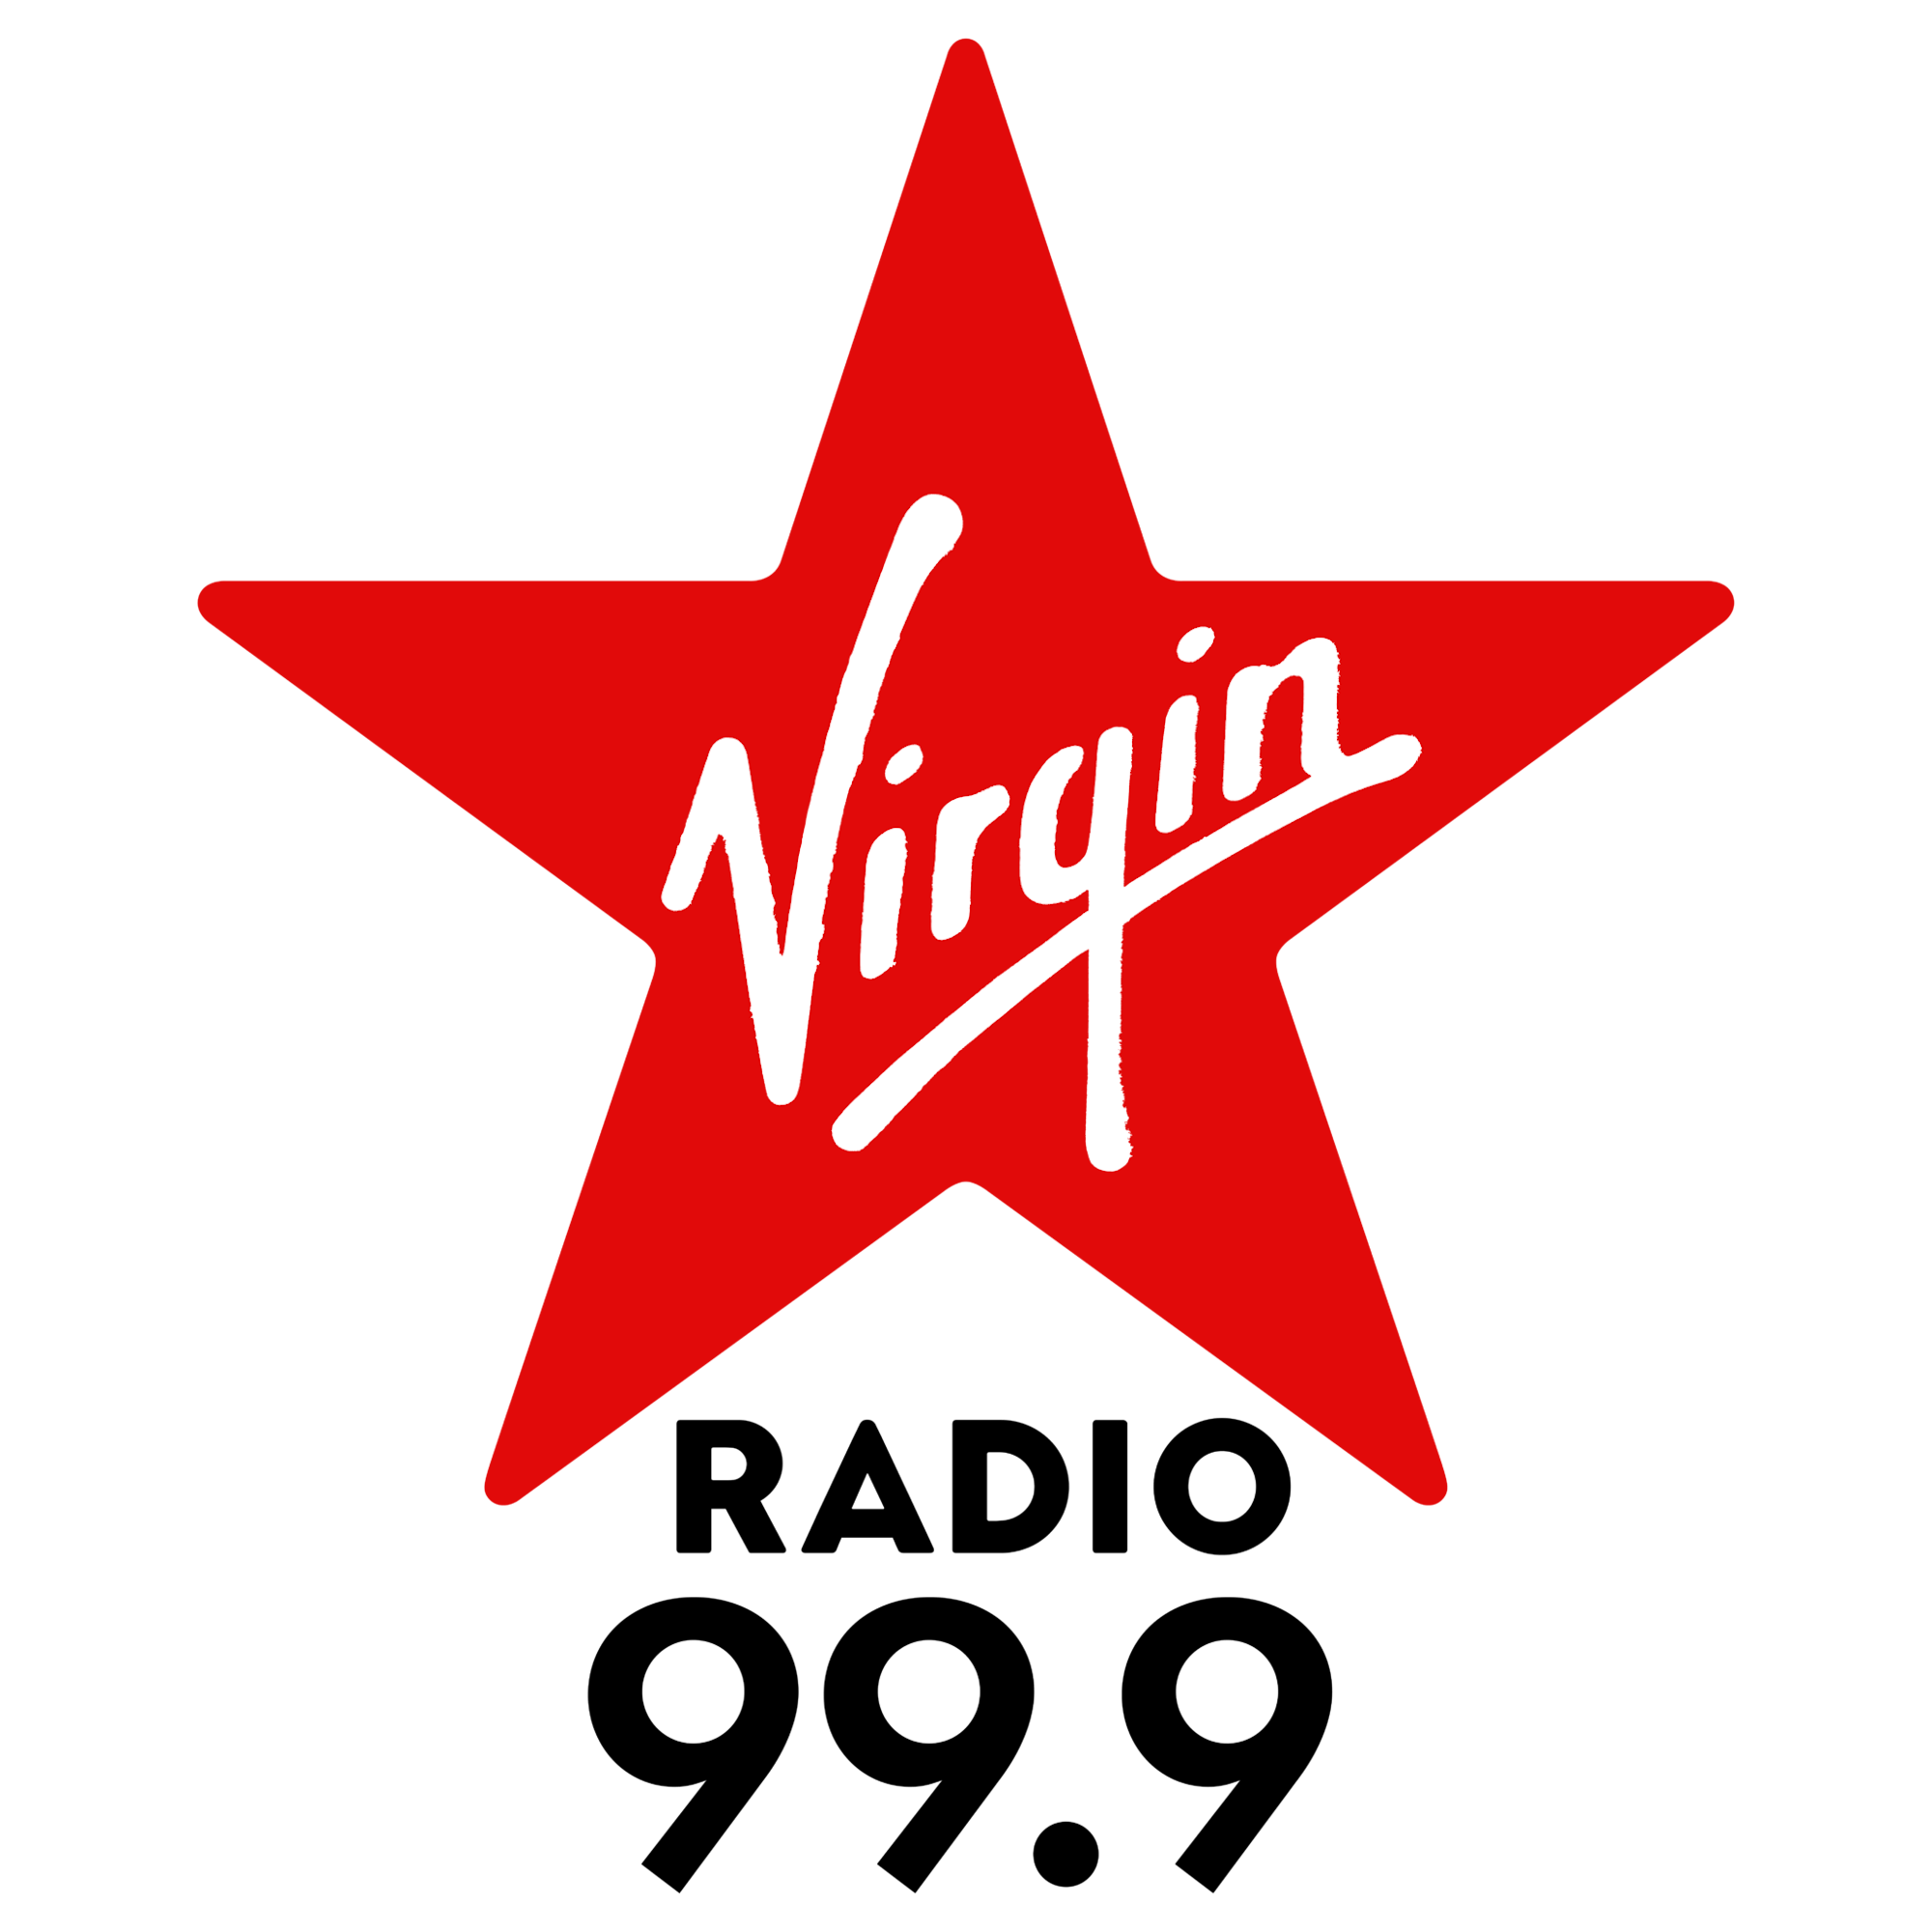 Virgin Radio 99.9 logo